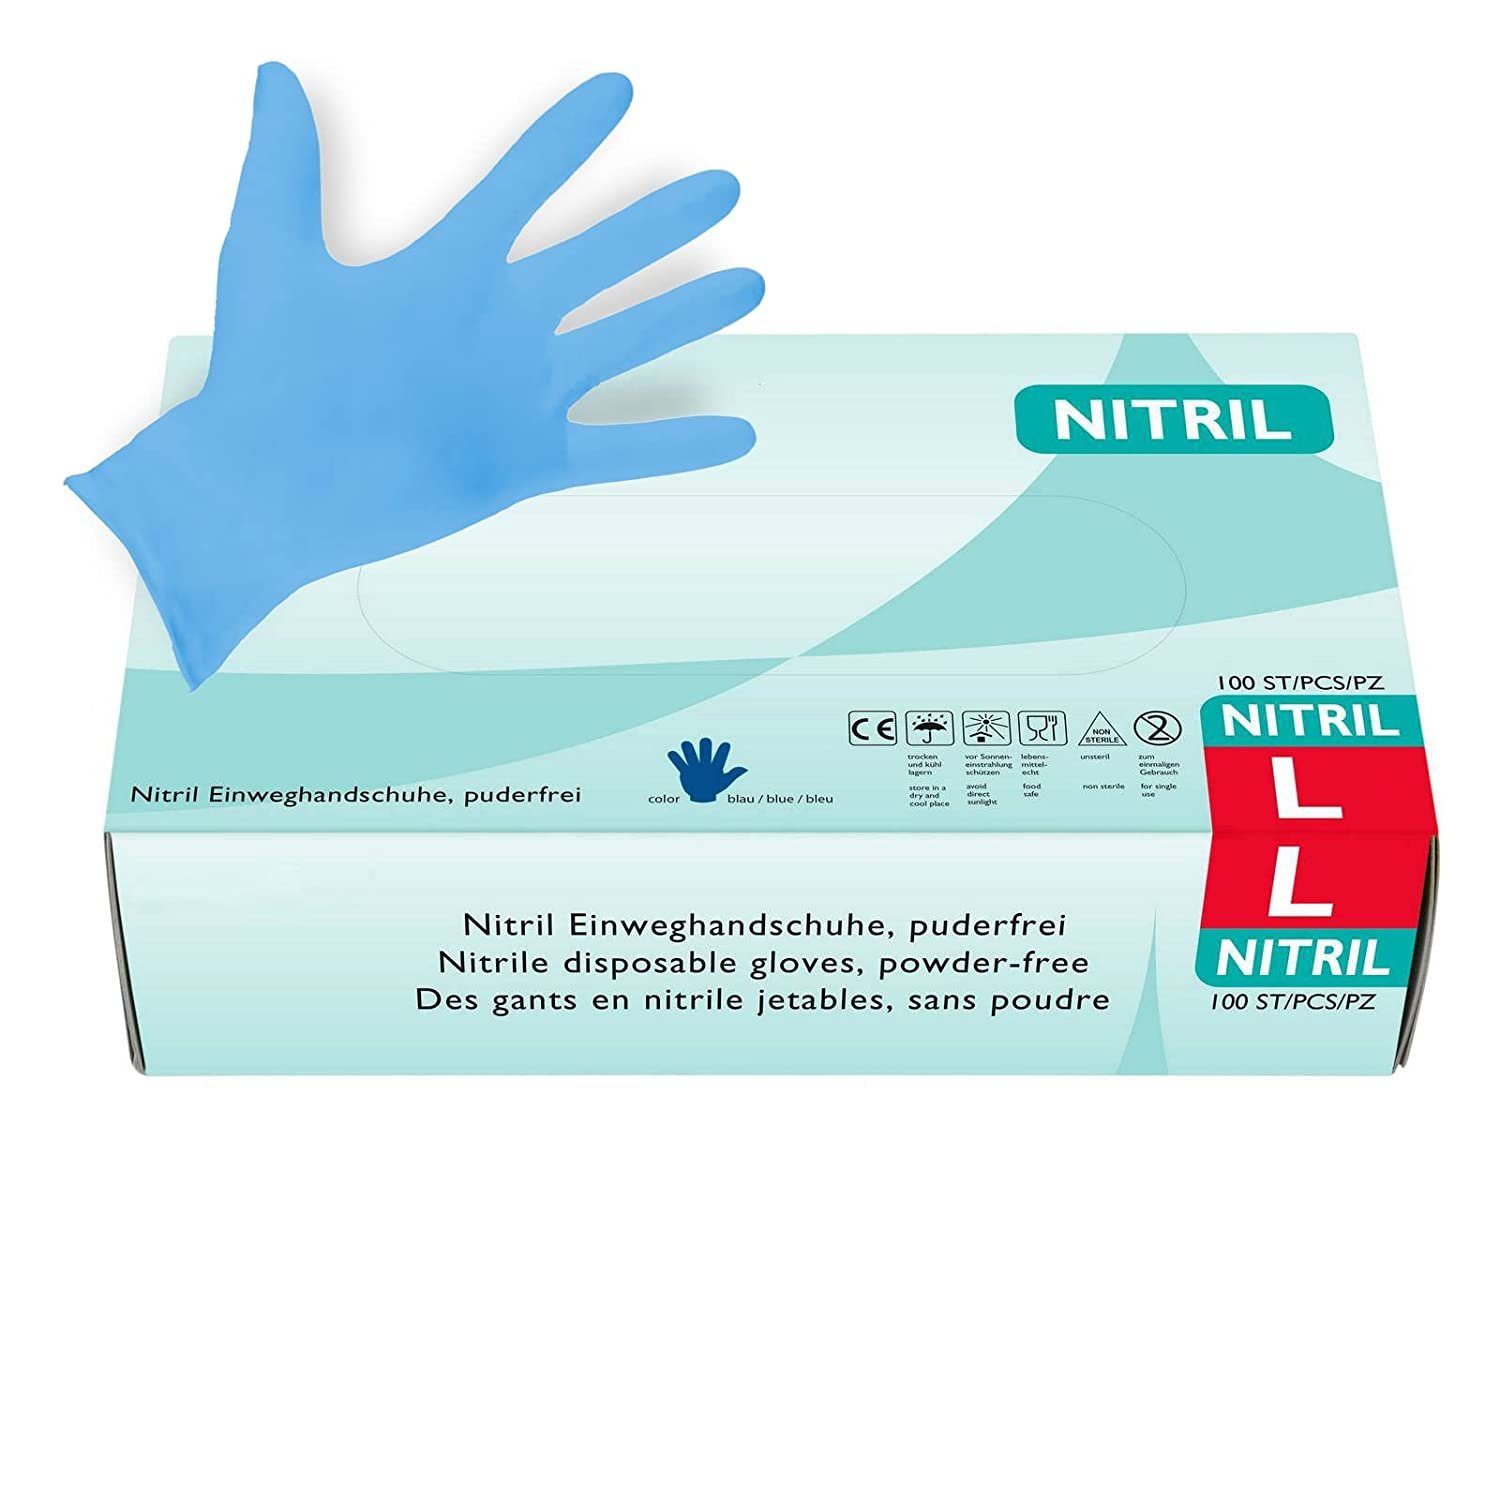 Blau texturiert Hypafol S-XL, Rollrand, Puderfrei Finger Nitril-Handschuhe mit I